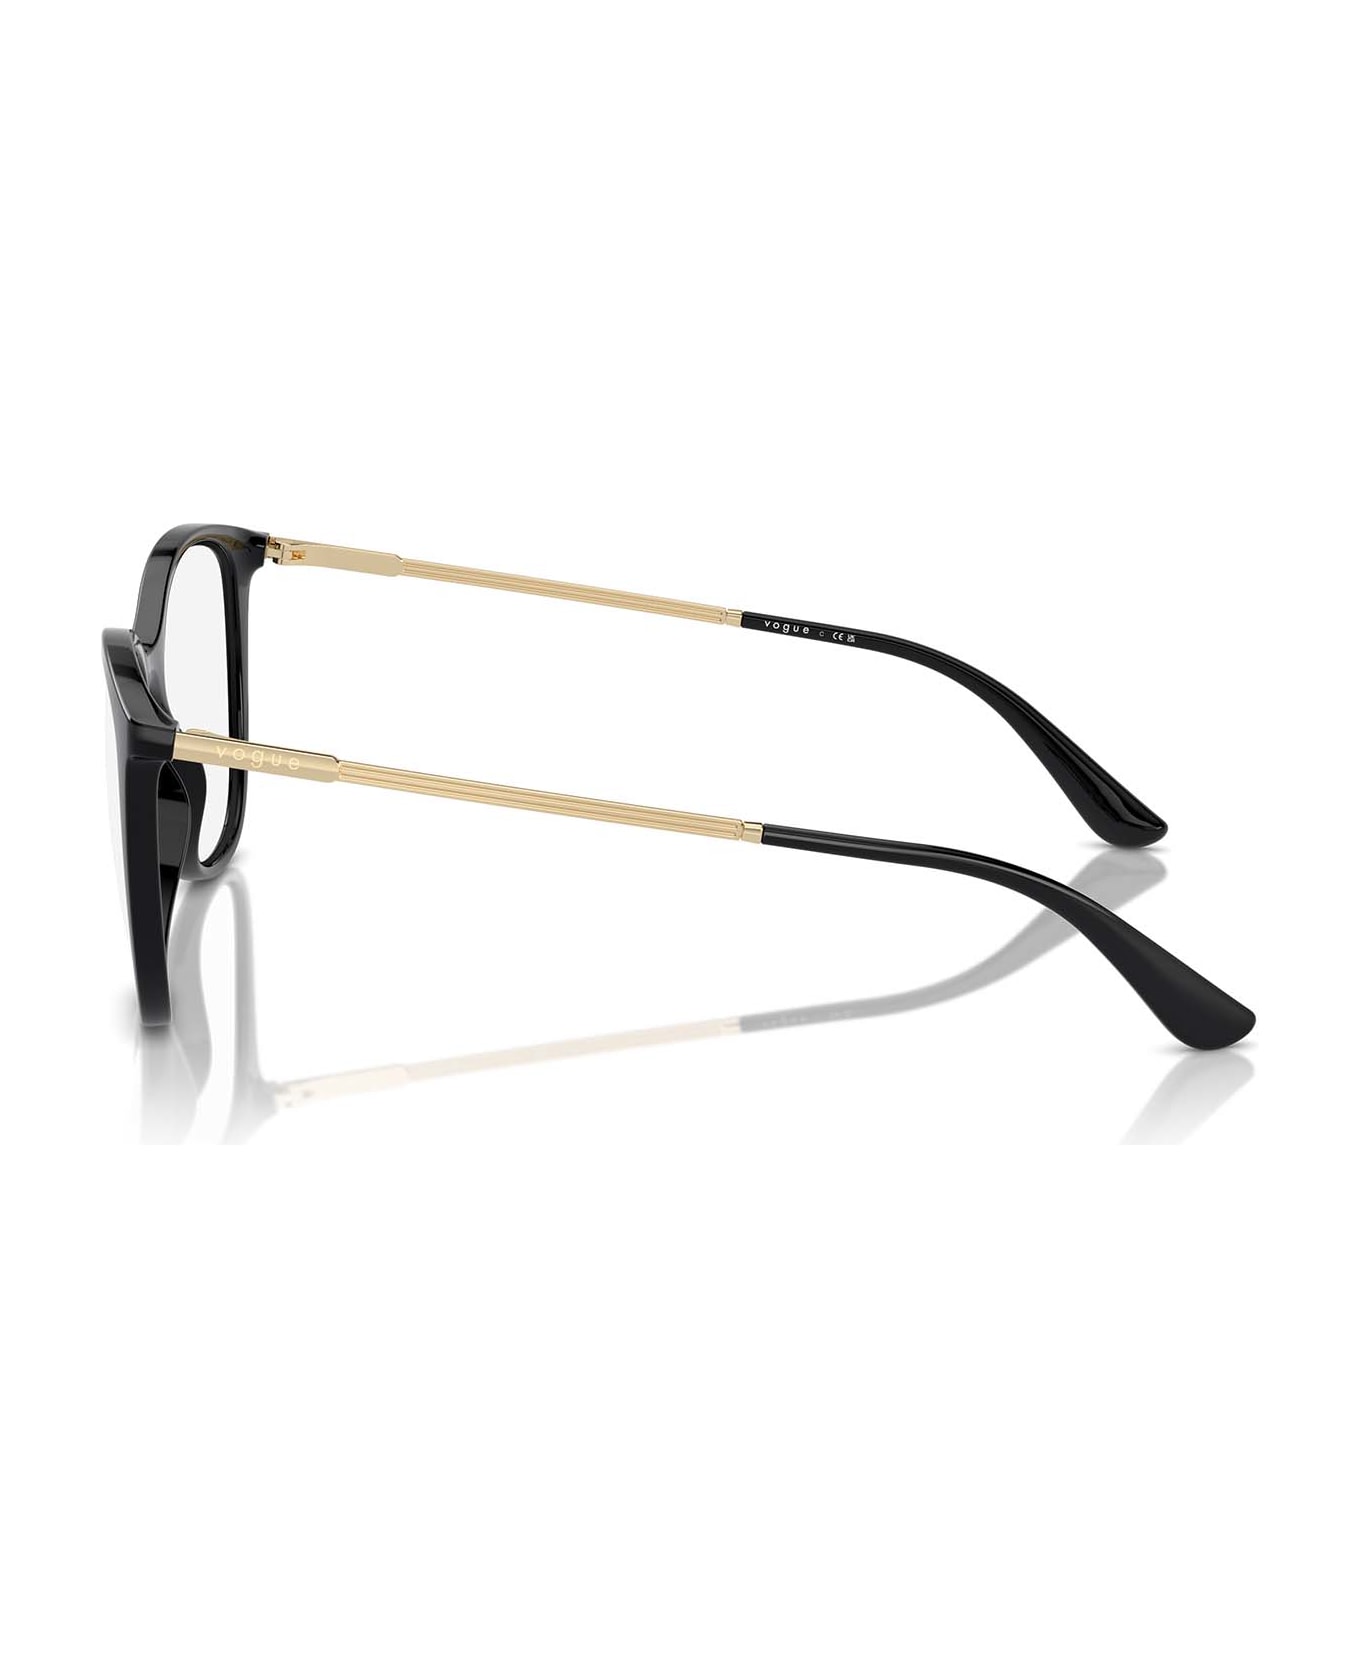 Vogue Eyewear Vo5562 Black Glasses - Black